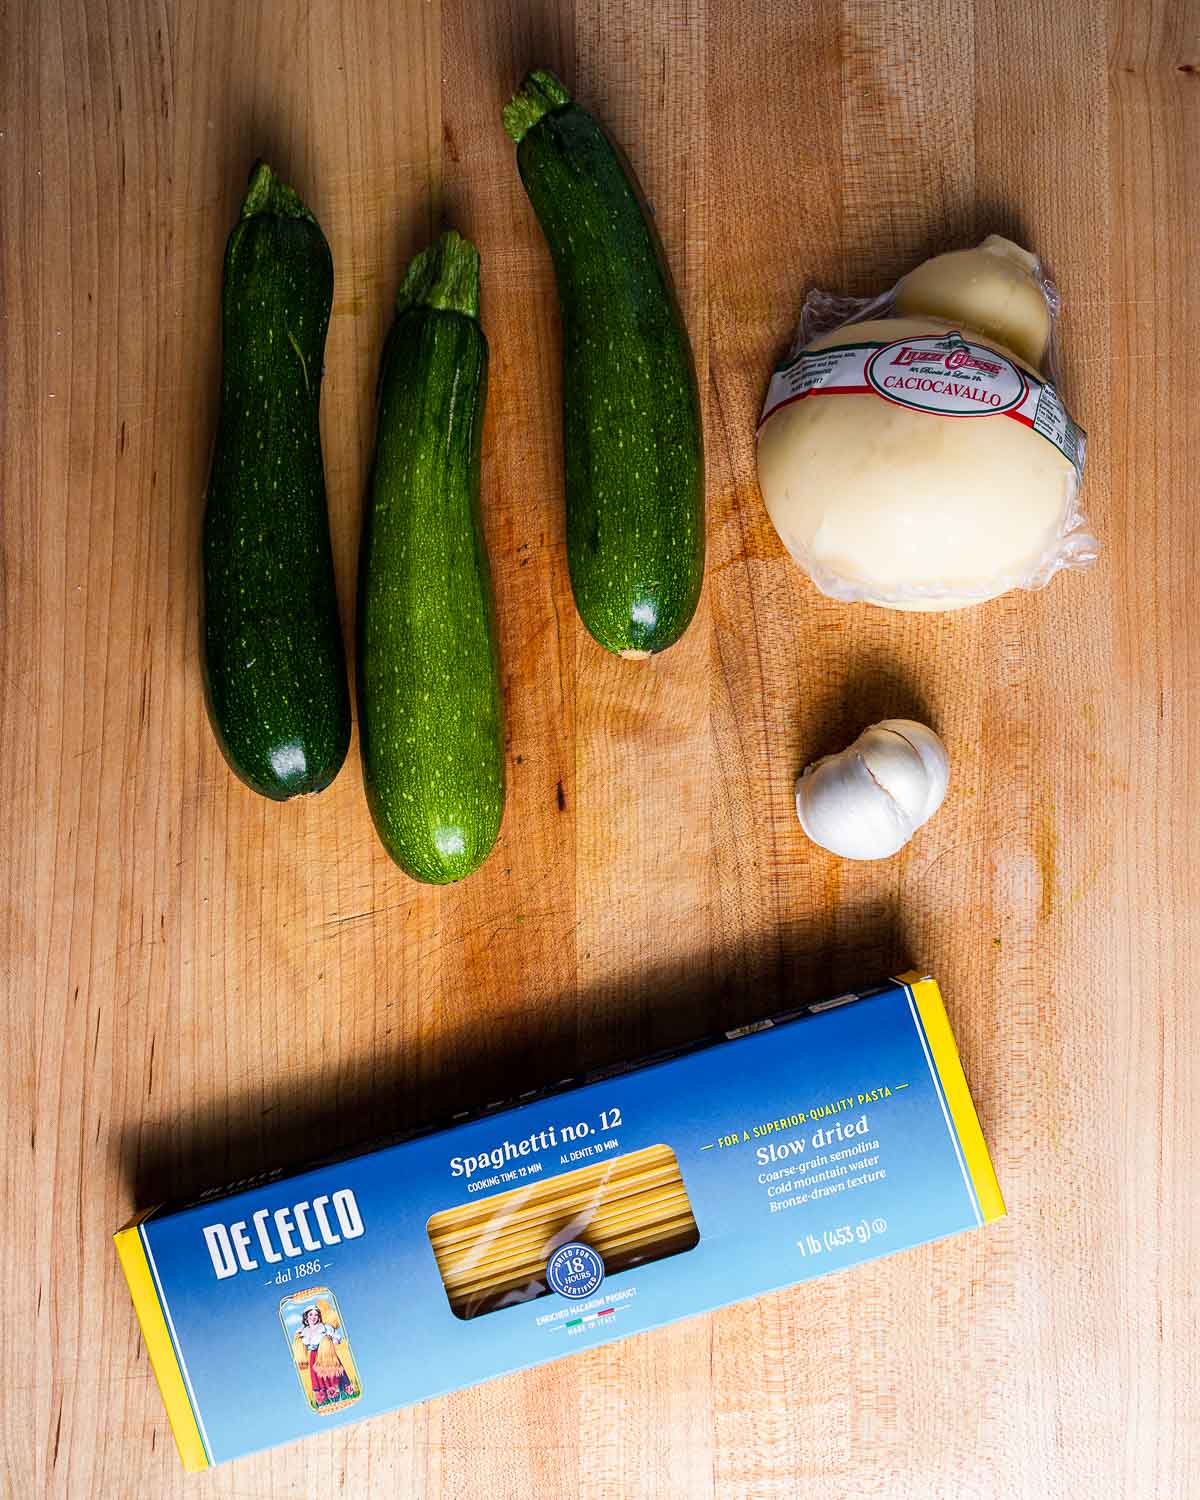 Ingredients shown: 3 medium zucchini, caciocavallo cheese, box of spaghetti, and head of garlic.